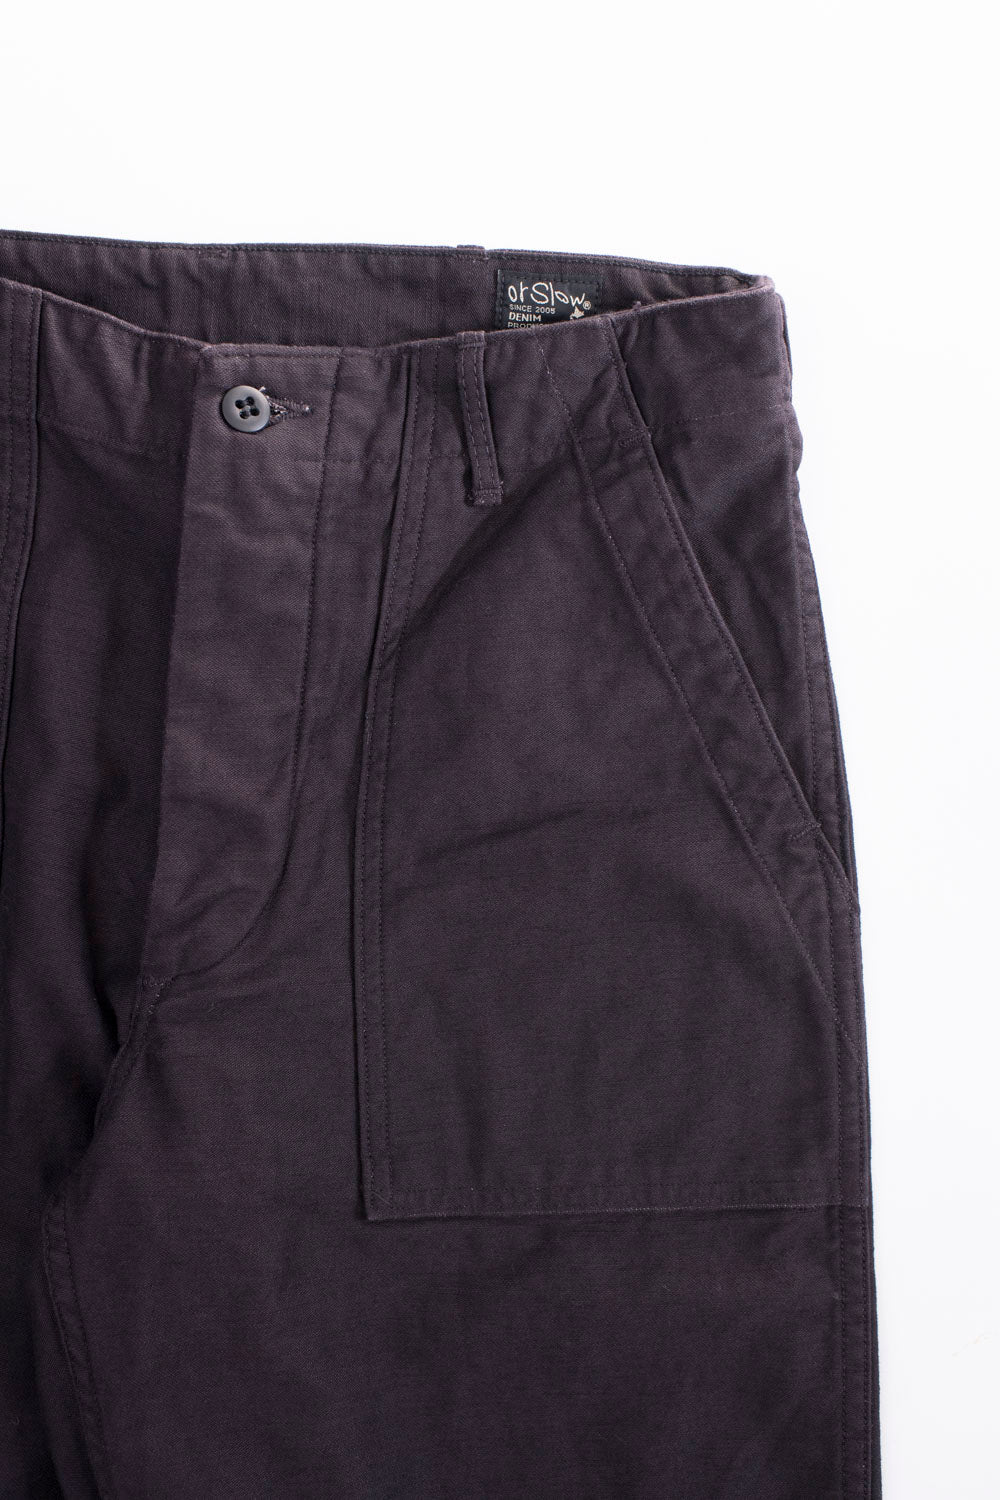 01-5002-61 - Fatigue Pants Reverse Sateen - Standard Fit - Black